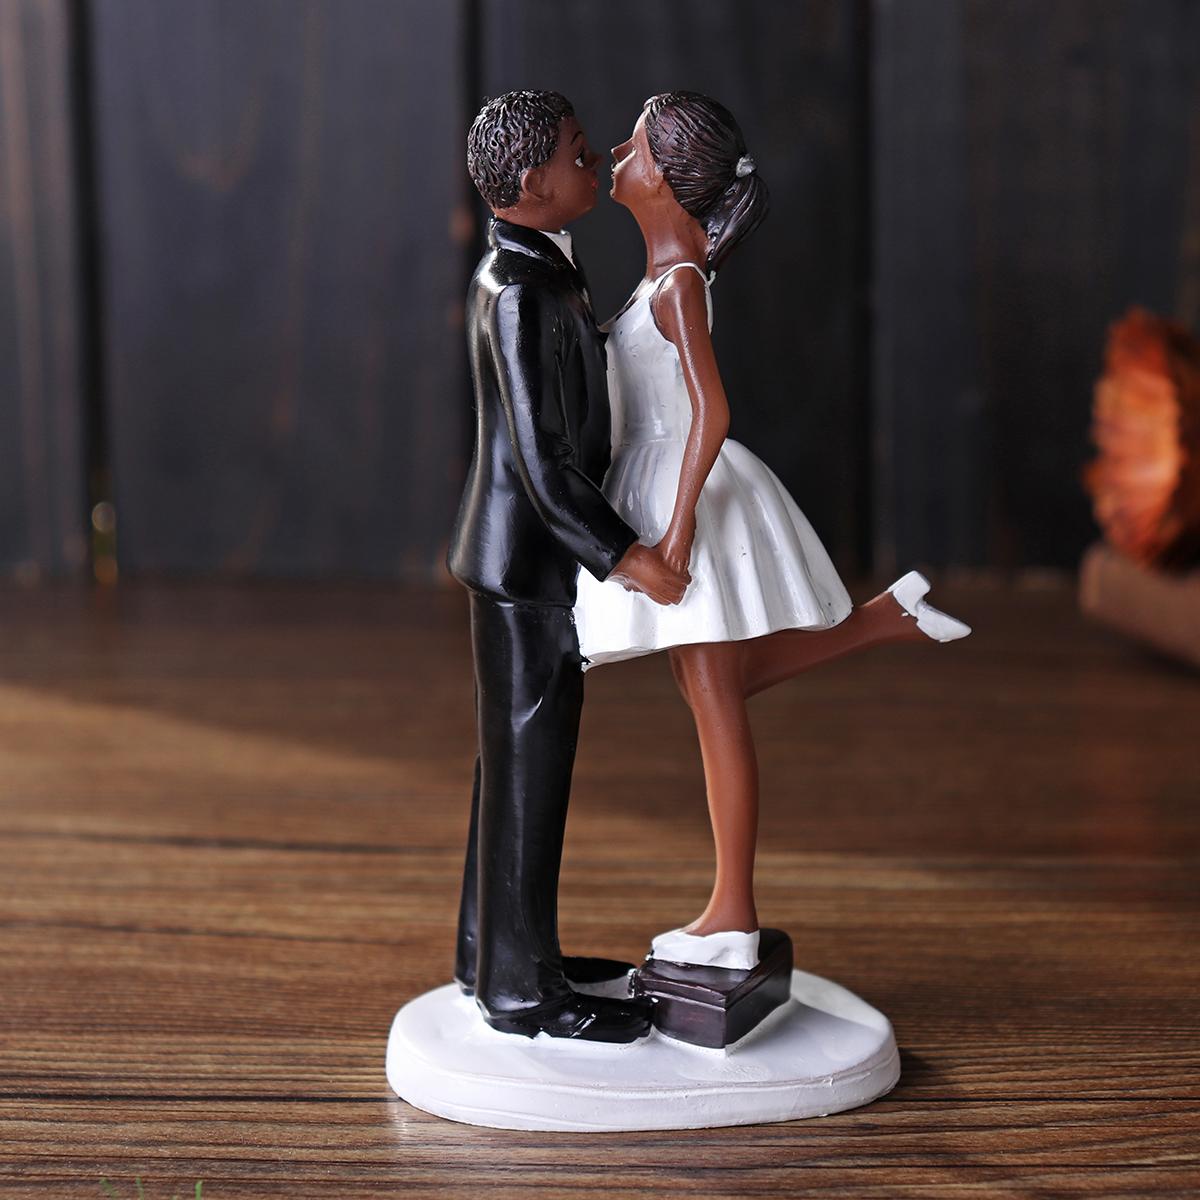 Romantic-Funny-Wedding-Cake-Topper-Figure-Bride-Groom-Couple-Bridal-Decorations-1421525-3